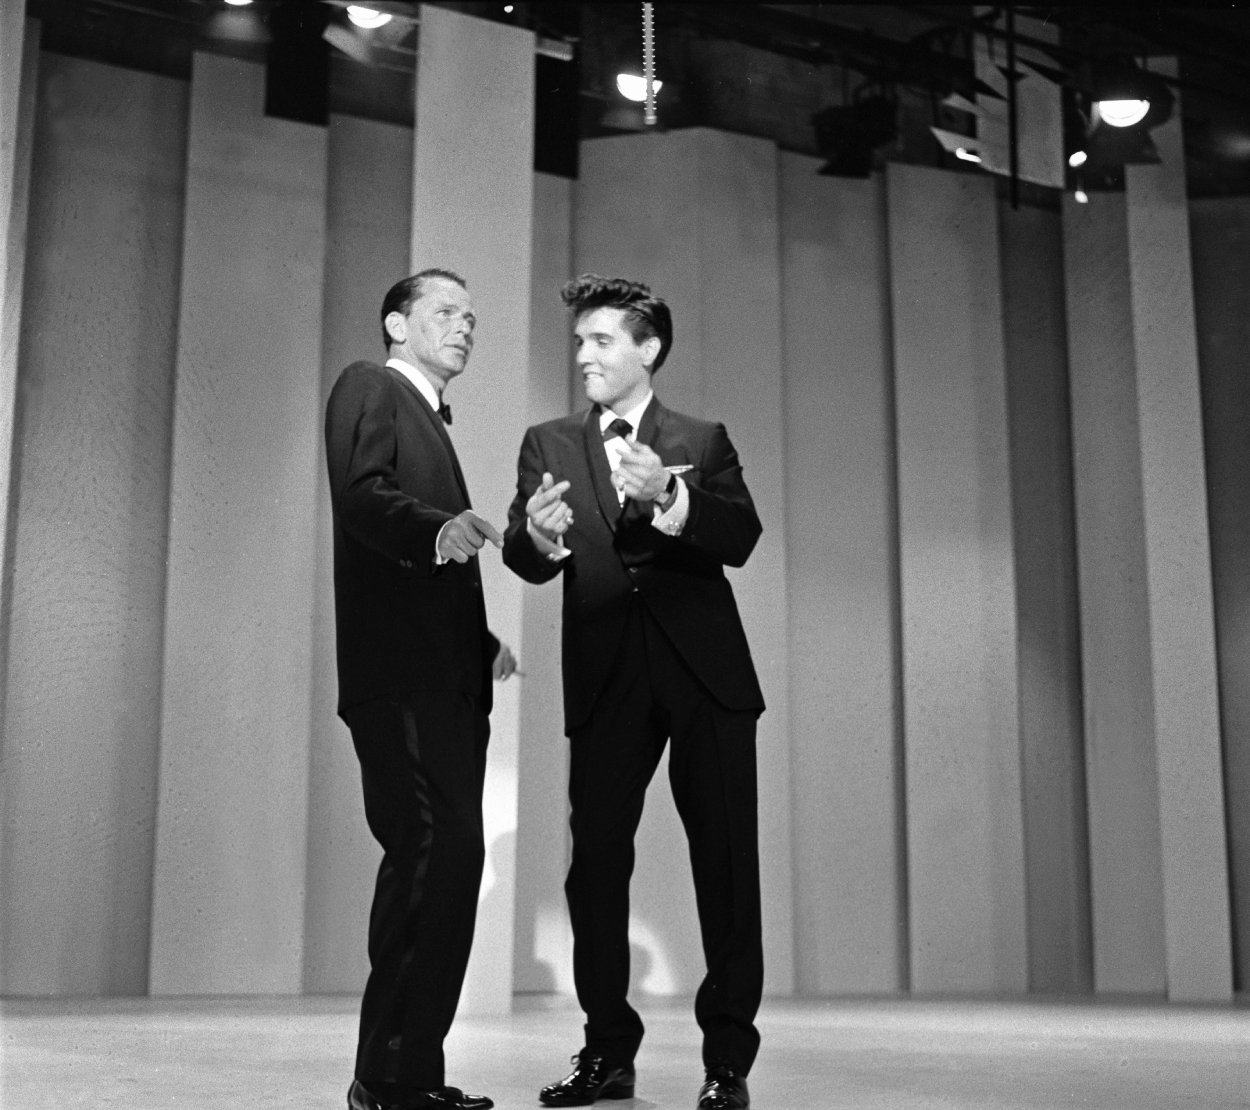 Frank Sinatra and Elvis Presley perform together on stage